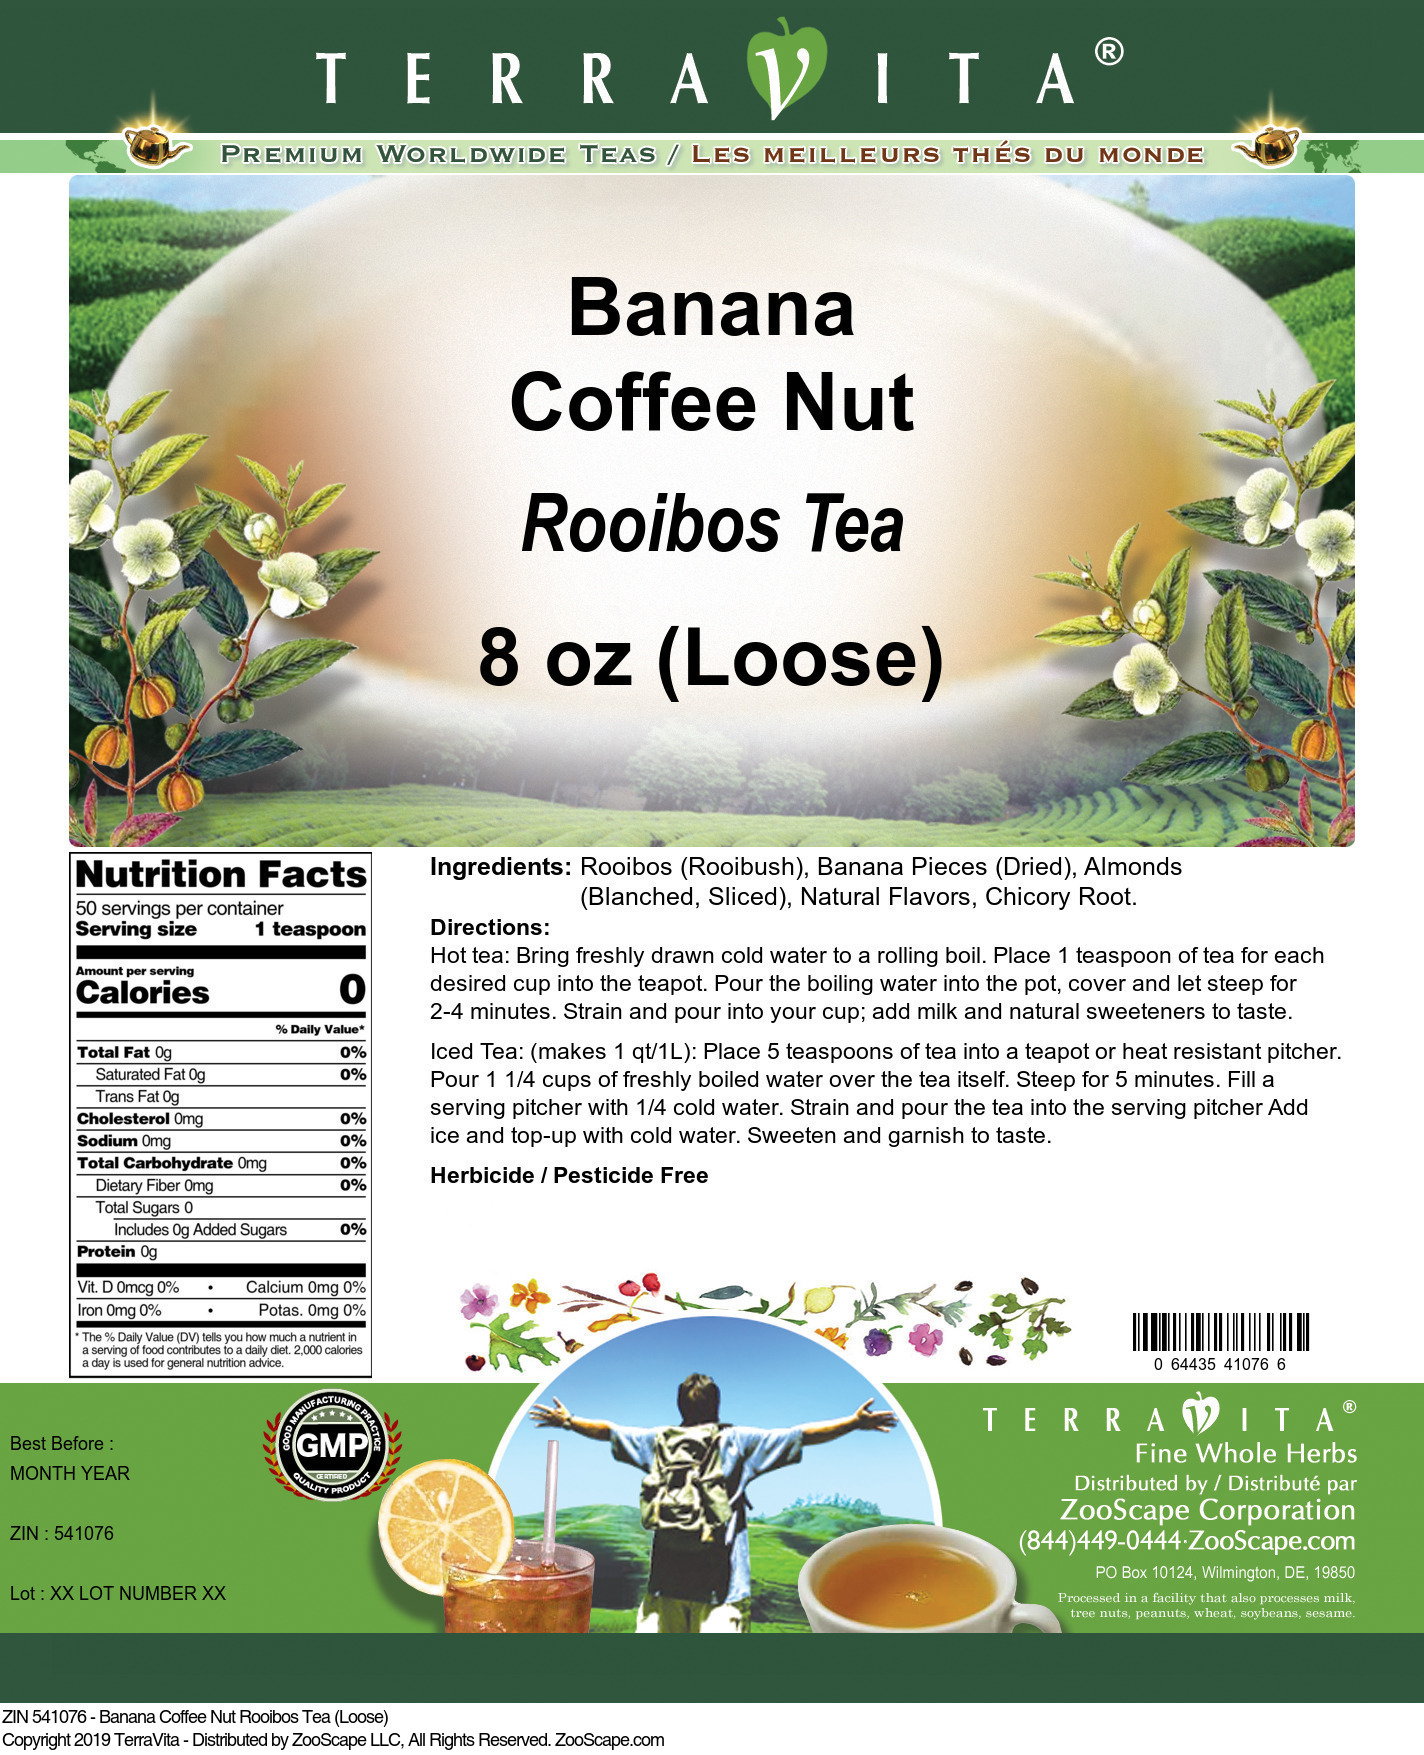 Banana Coffee Nut Rooibos Tea (Loose) - Label